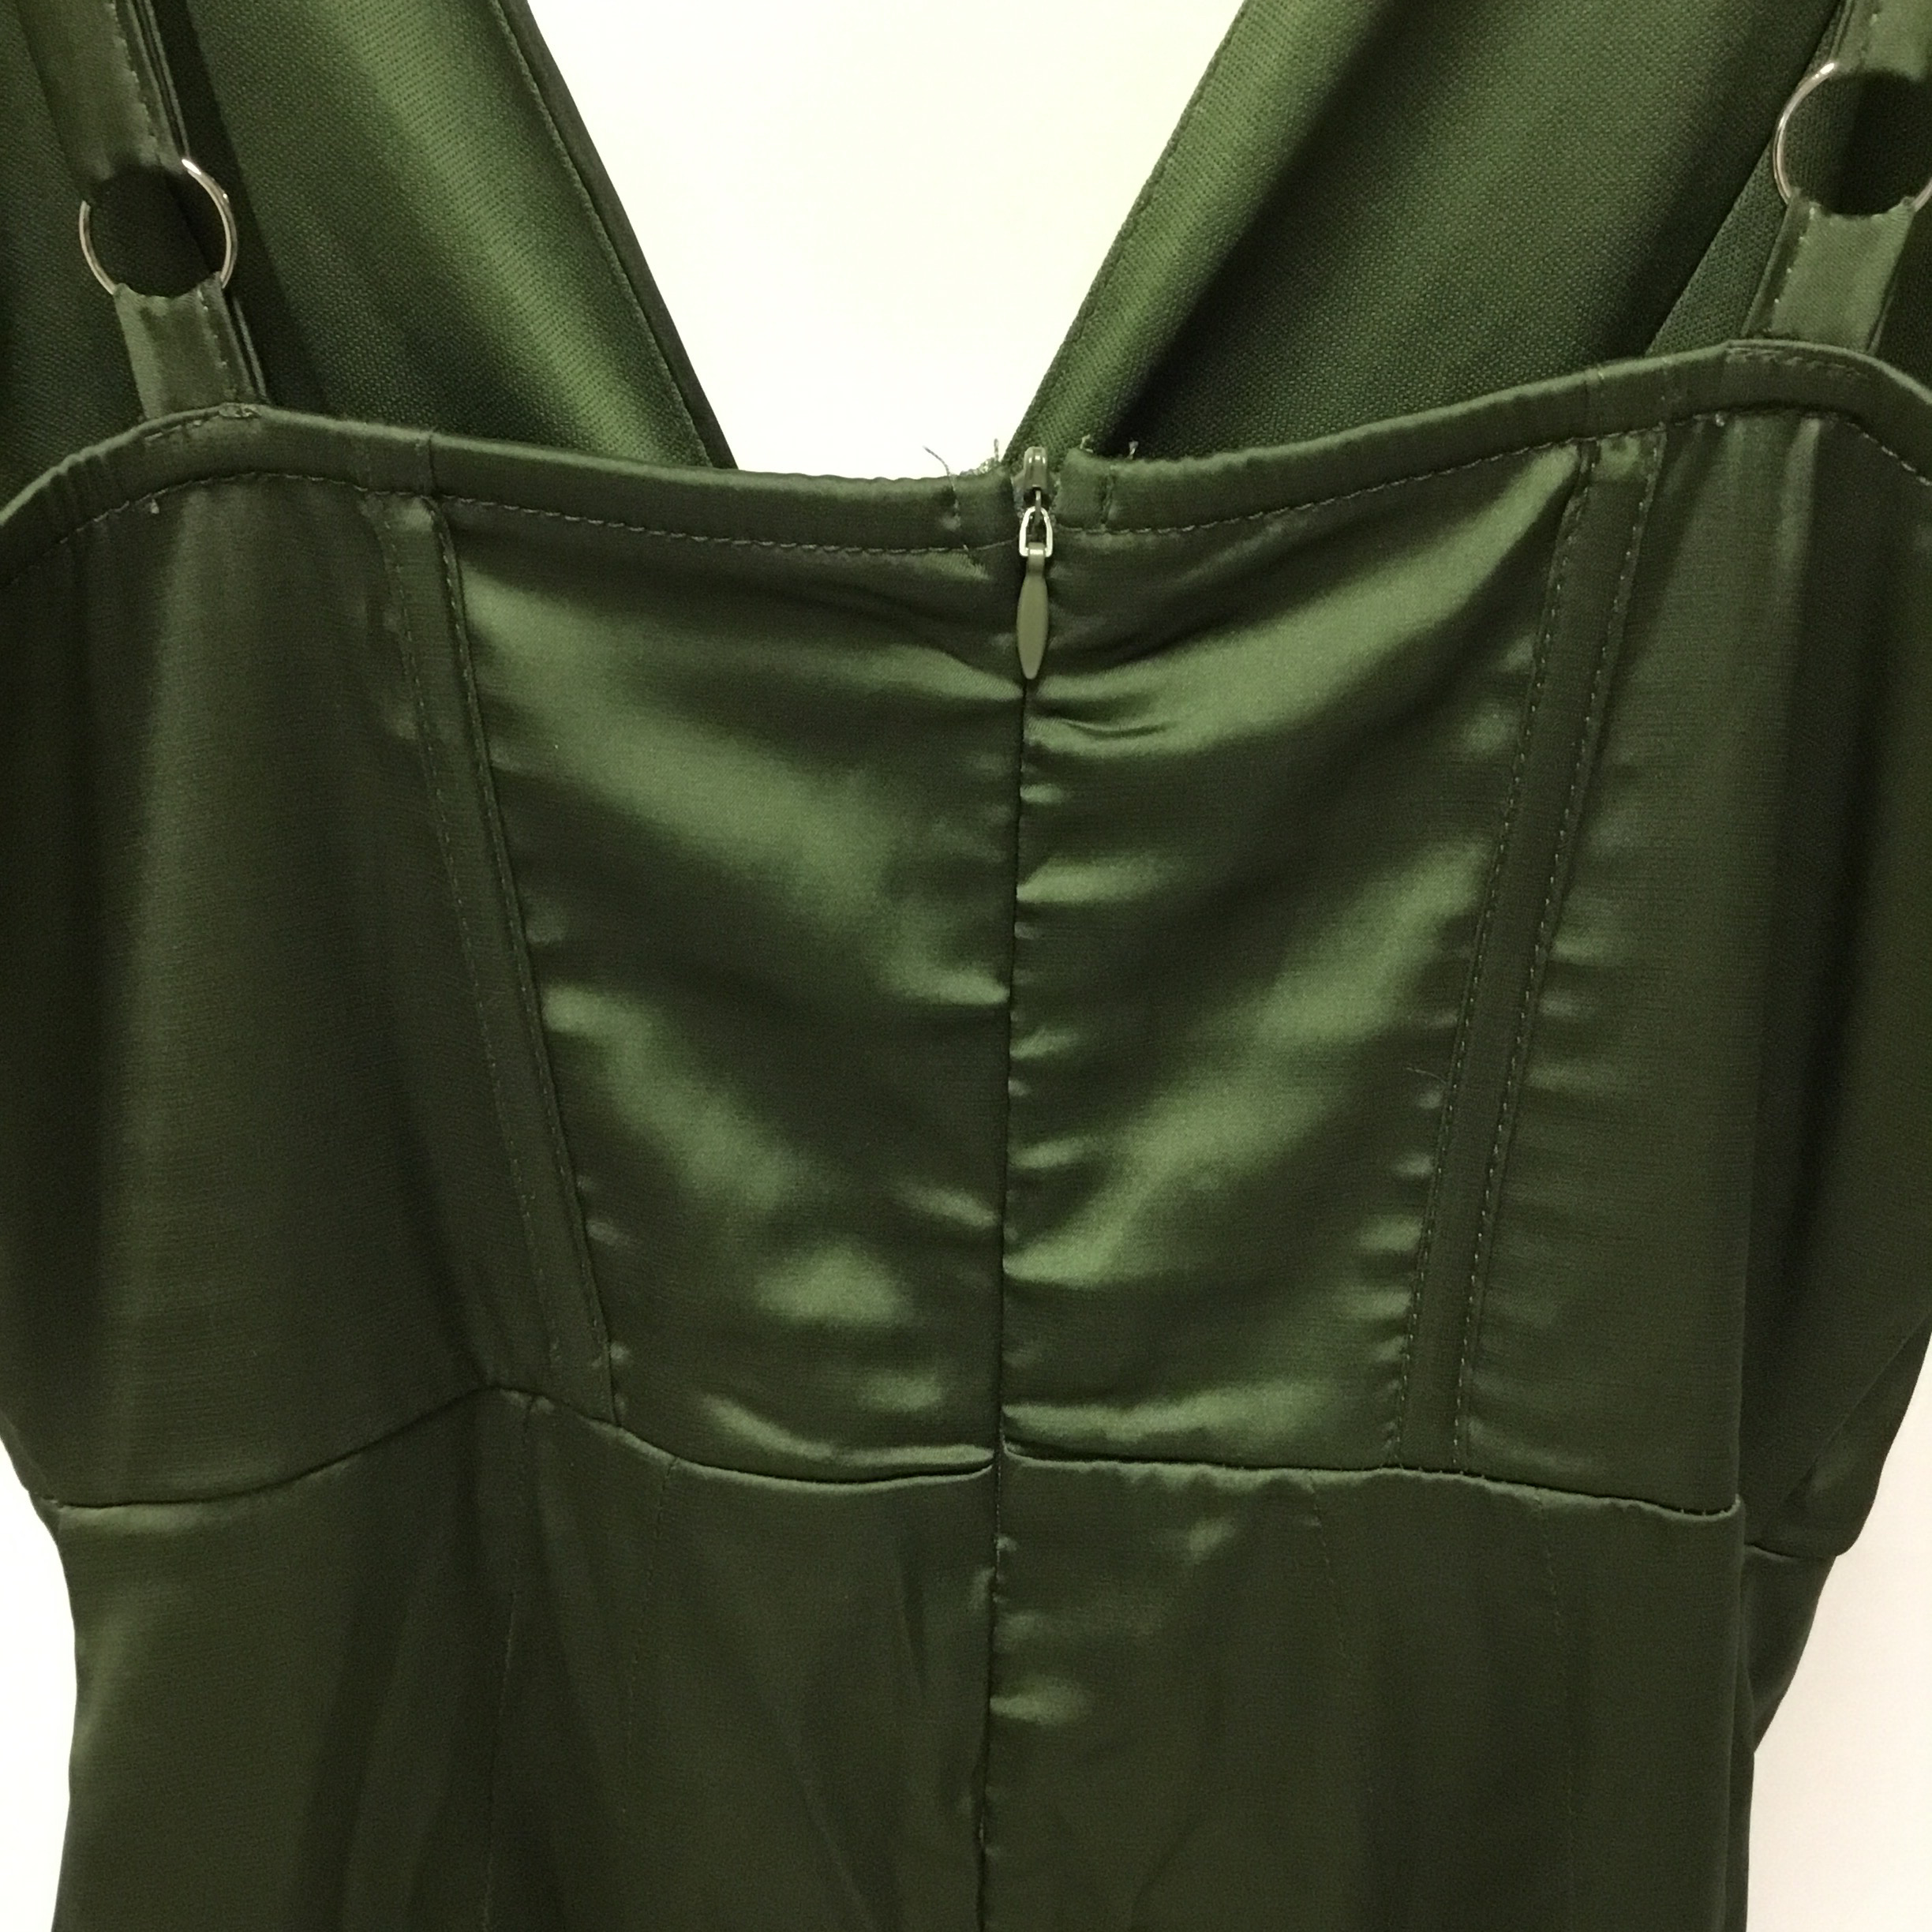 Women's PU Leather Crop Top Push Up Corset Lace Up Zipper Back Bustier  Clubwear